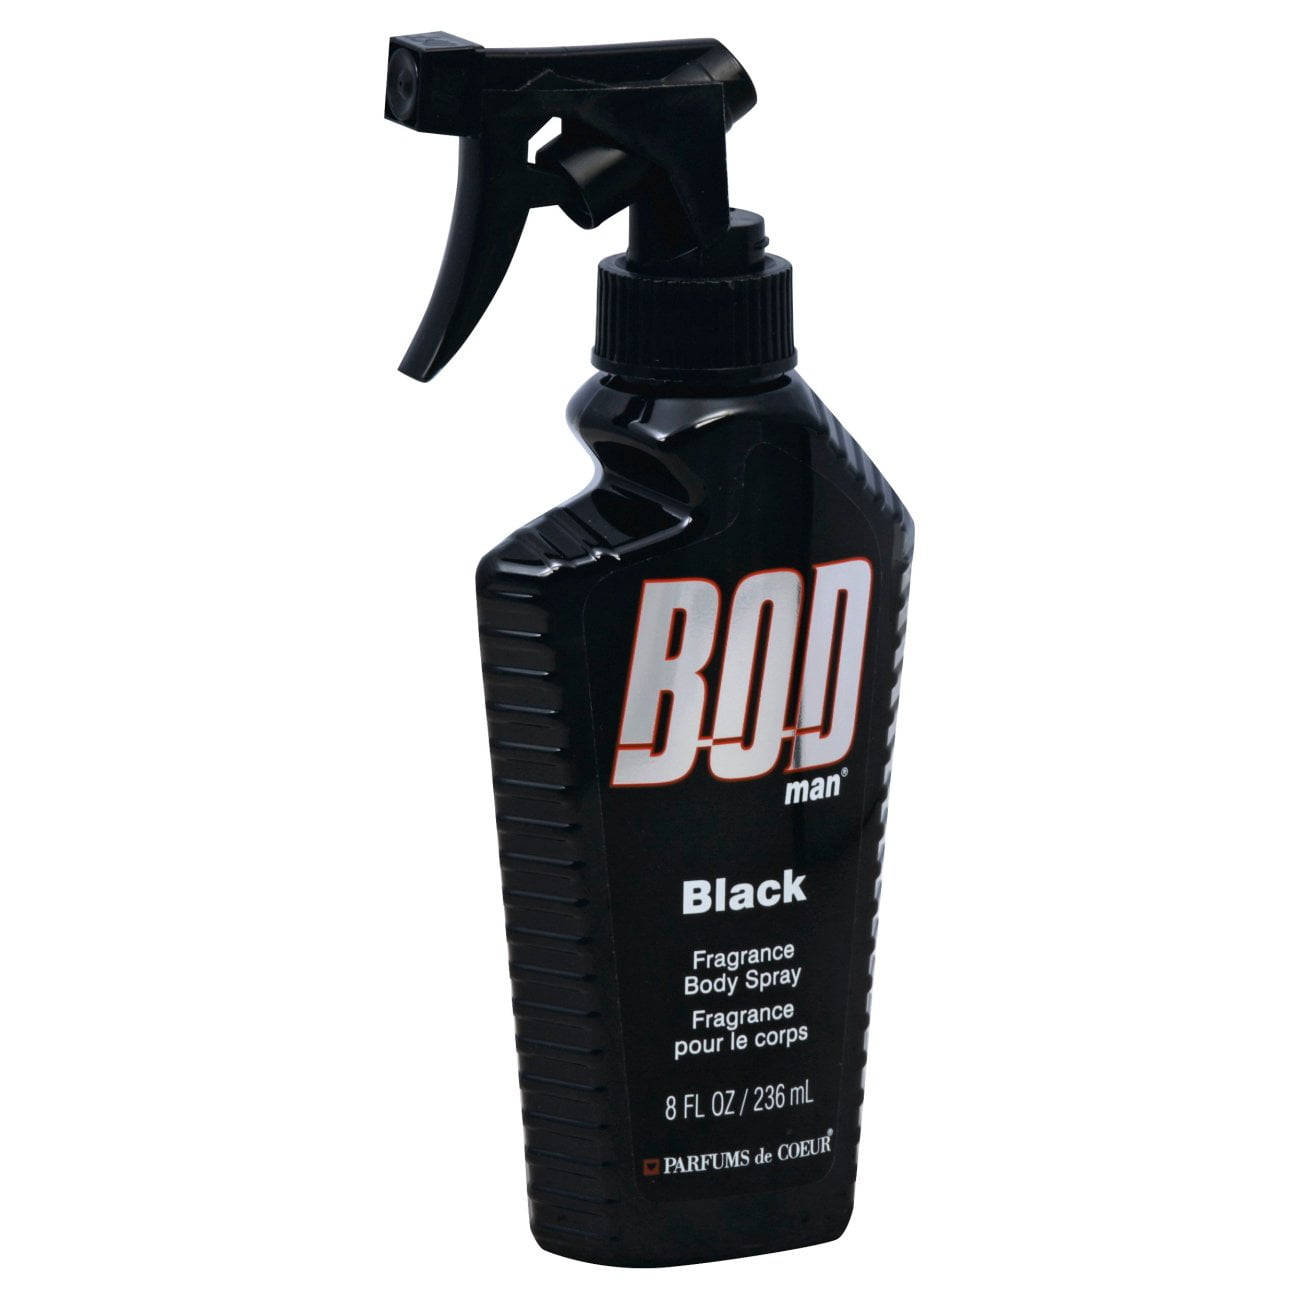 Bod Man Black Body Spray | Lami Fragrance